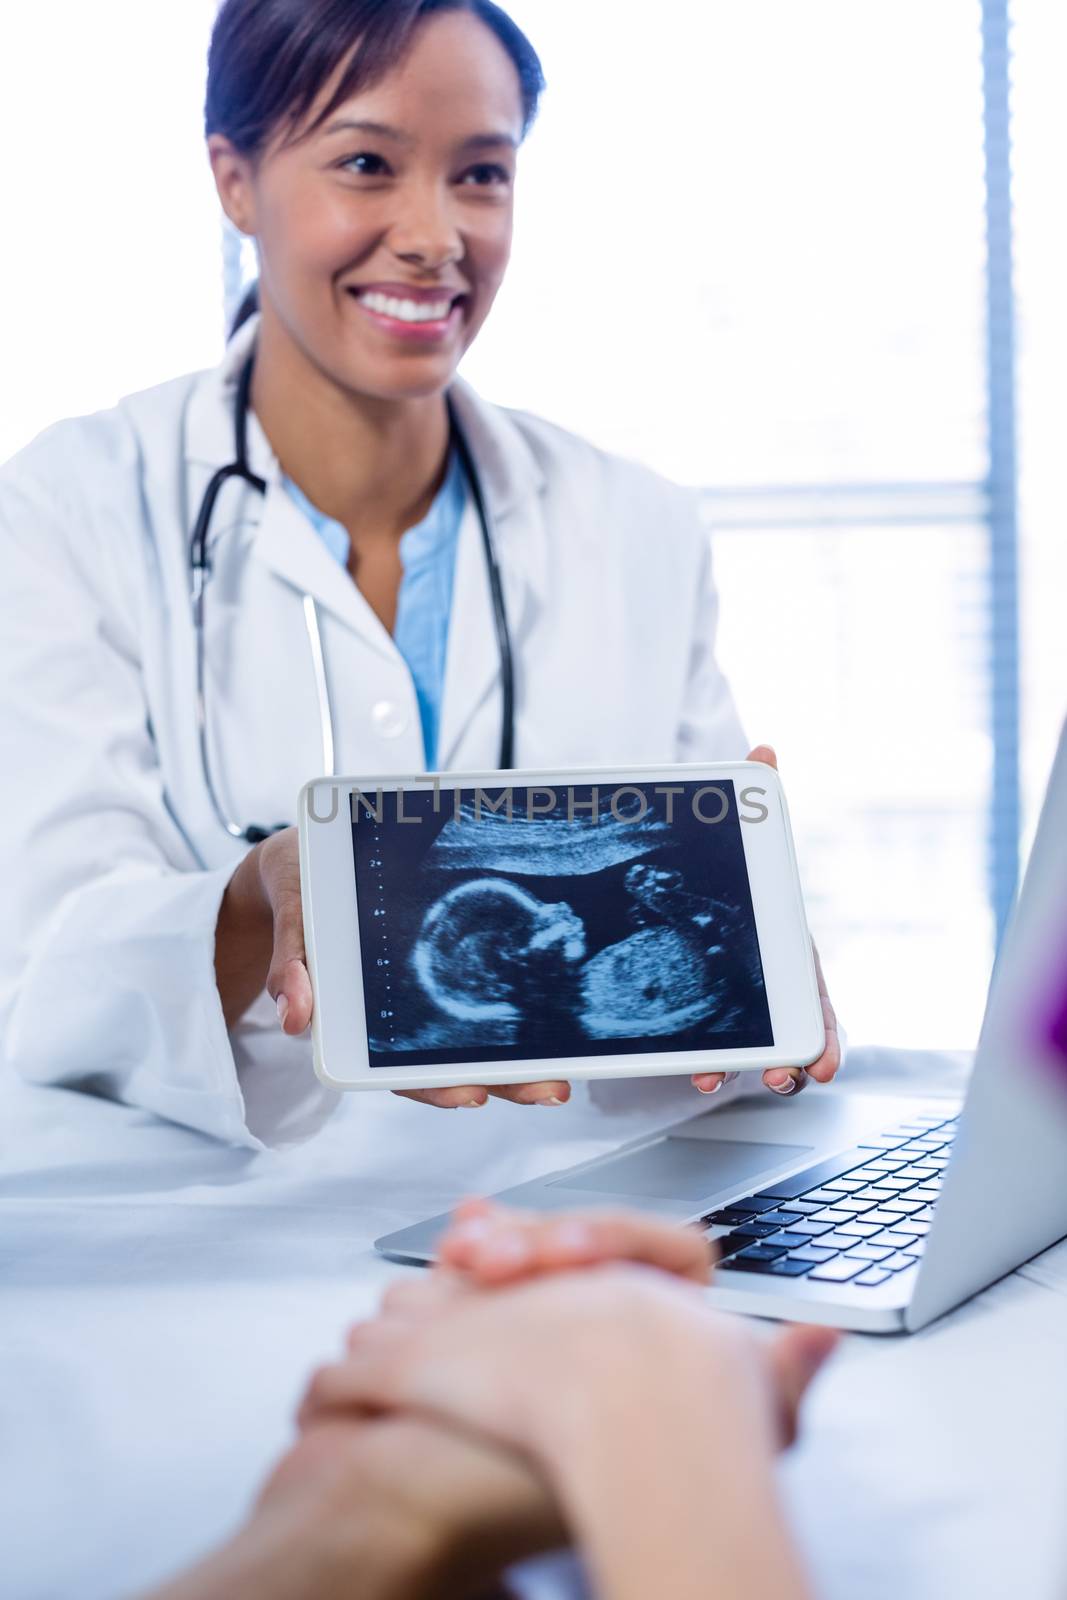 Doctor showing babies ultrasound scan on digital tablet in hospital